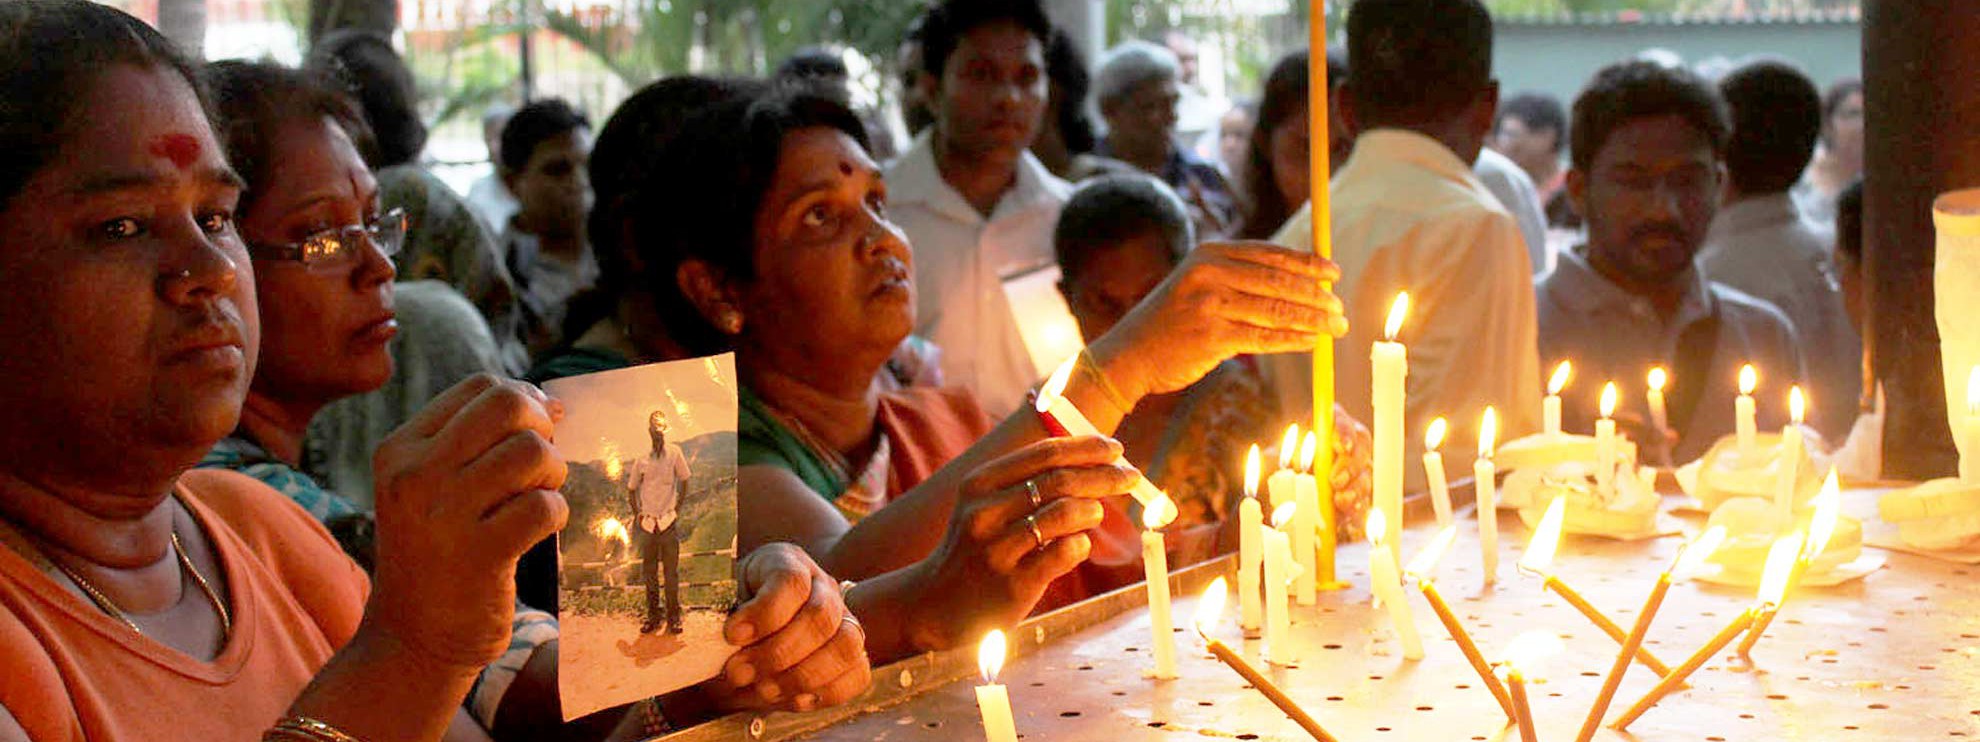 Angehörige protestieren gegen das Verschwinden von Verwandten in Colombo, 12. Januar 2012. © Vikalpasl / Creative Commons